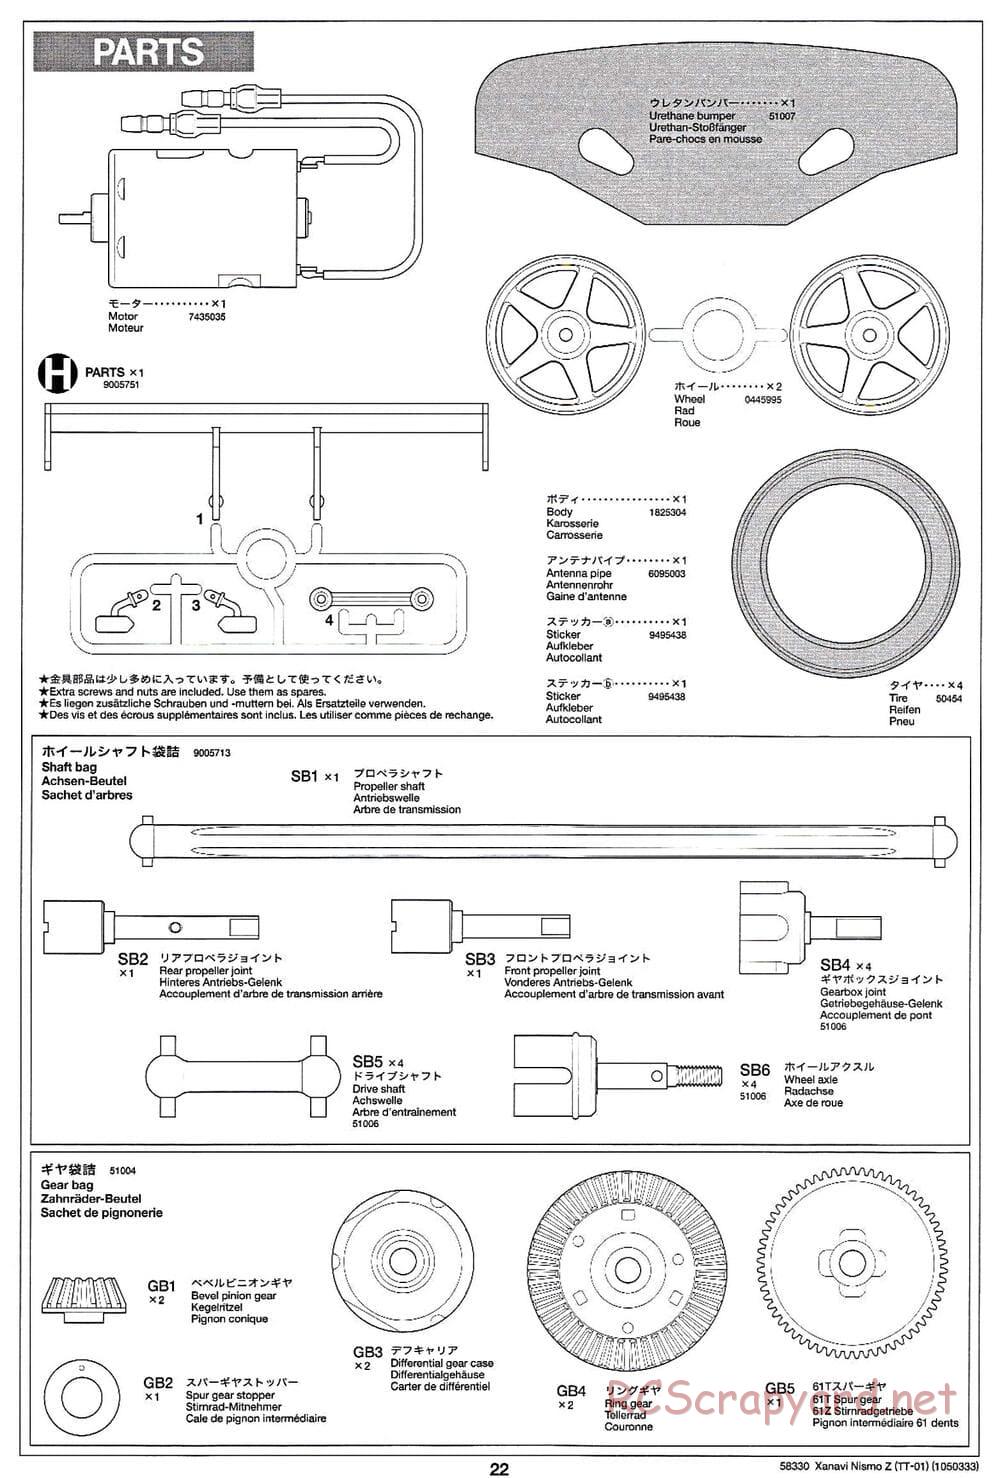 Tamiya - Xanavi Nismo Z - TT-01 Chassis - Manual - Page 22